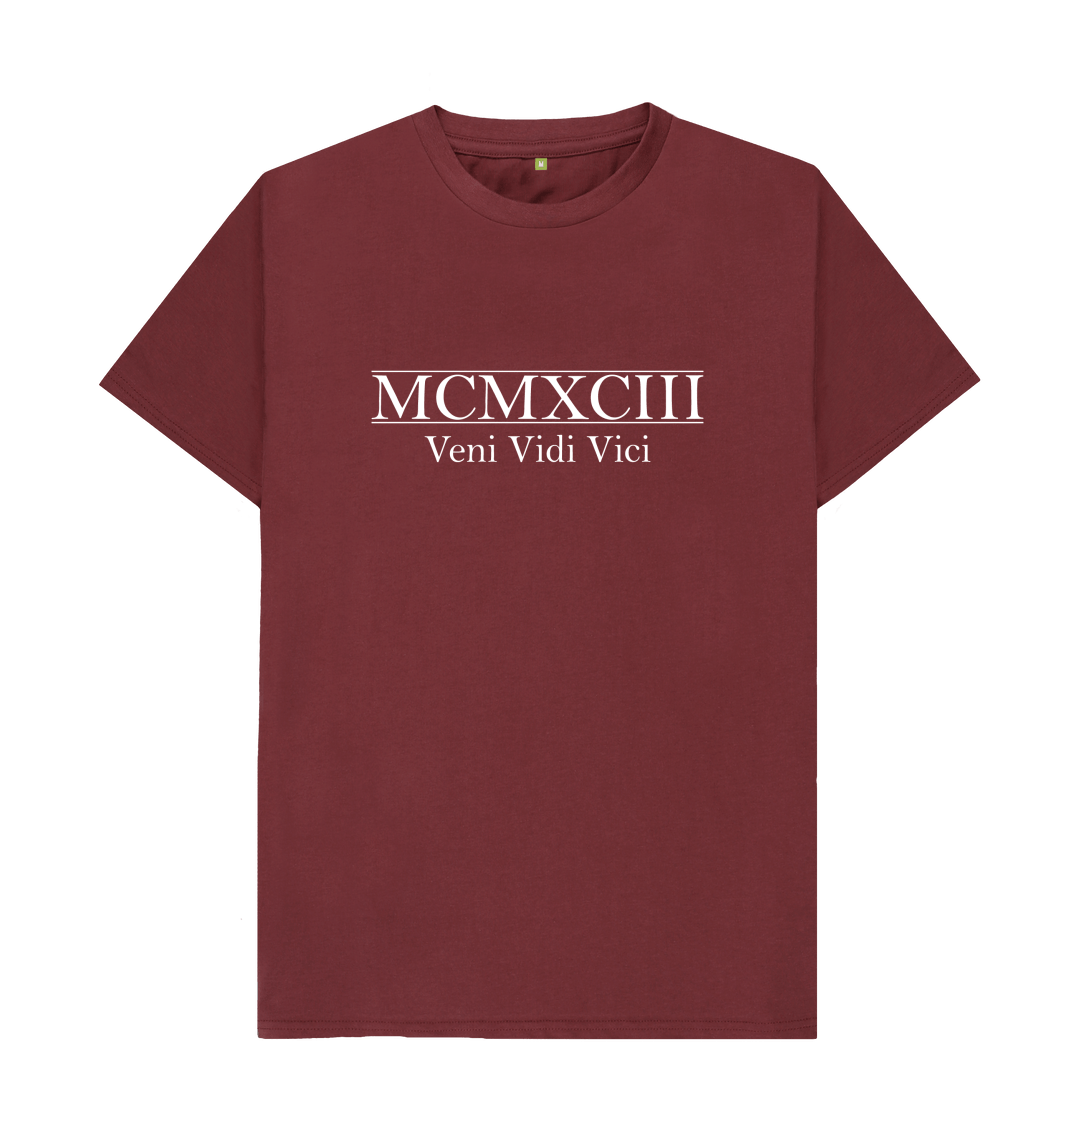 30th Birthday T Shirt MCMXCIII Veni Vidi Vici (1993)